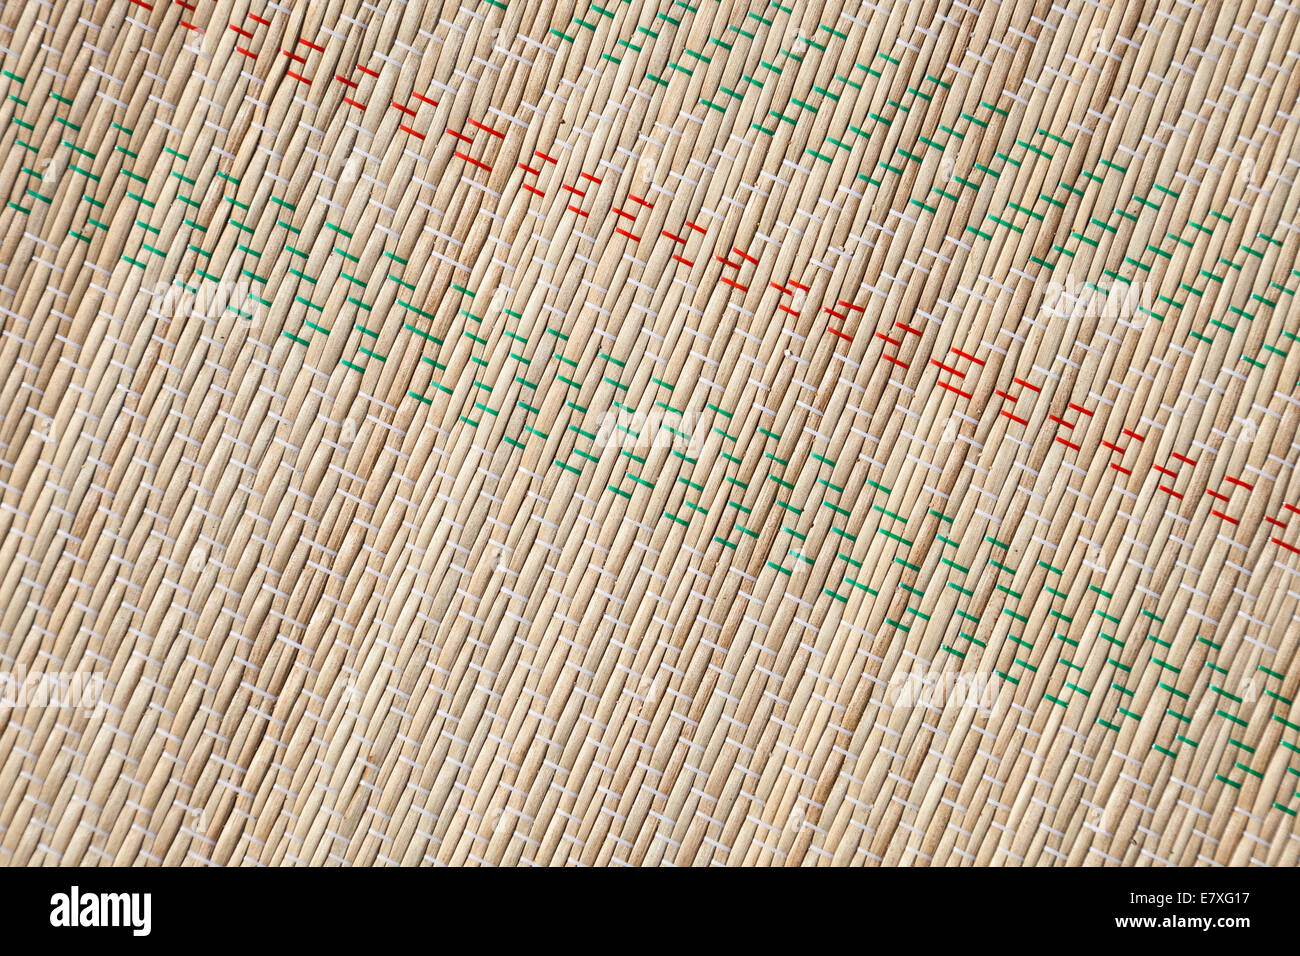 Bambus Matte Muster, detaillierte Hintergrundtextur Foto Stockfoto